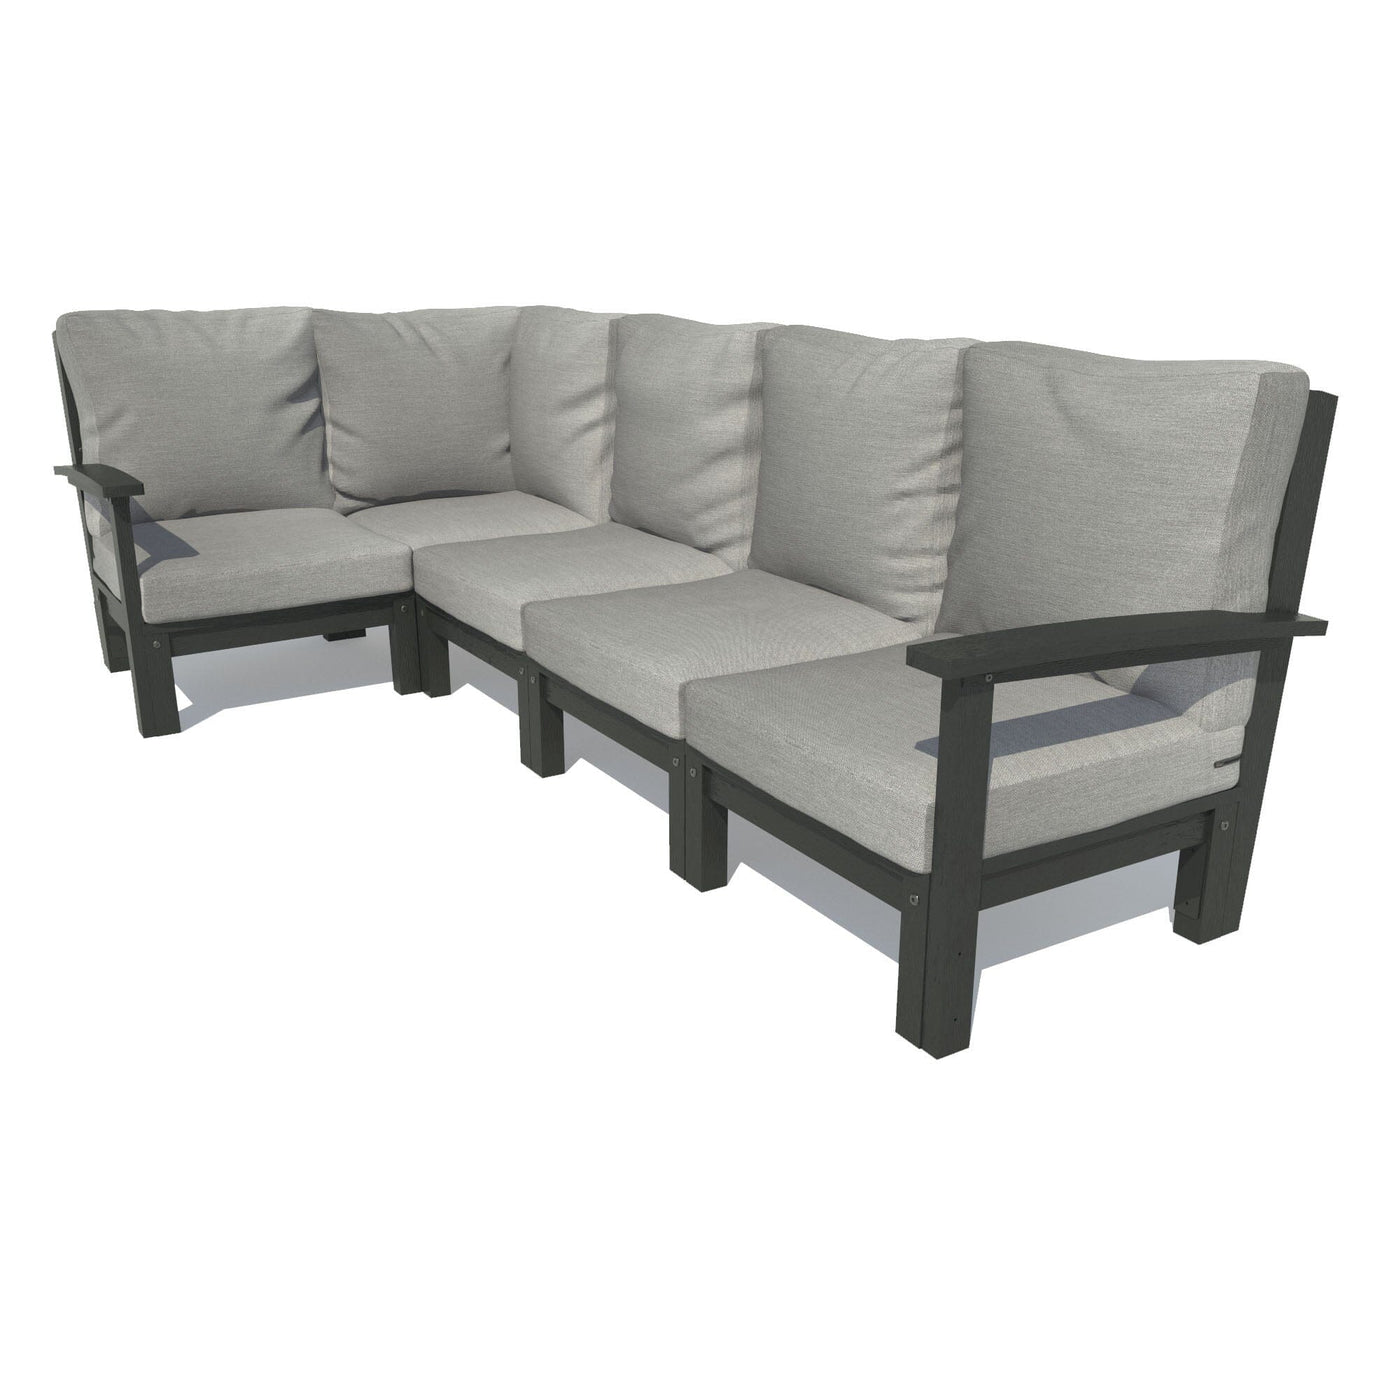 Bespoke Deep Seating: 5 Piece Sectional Set Deep Seating Highwood USA Stone Gray Black 